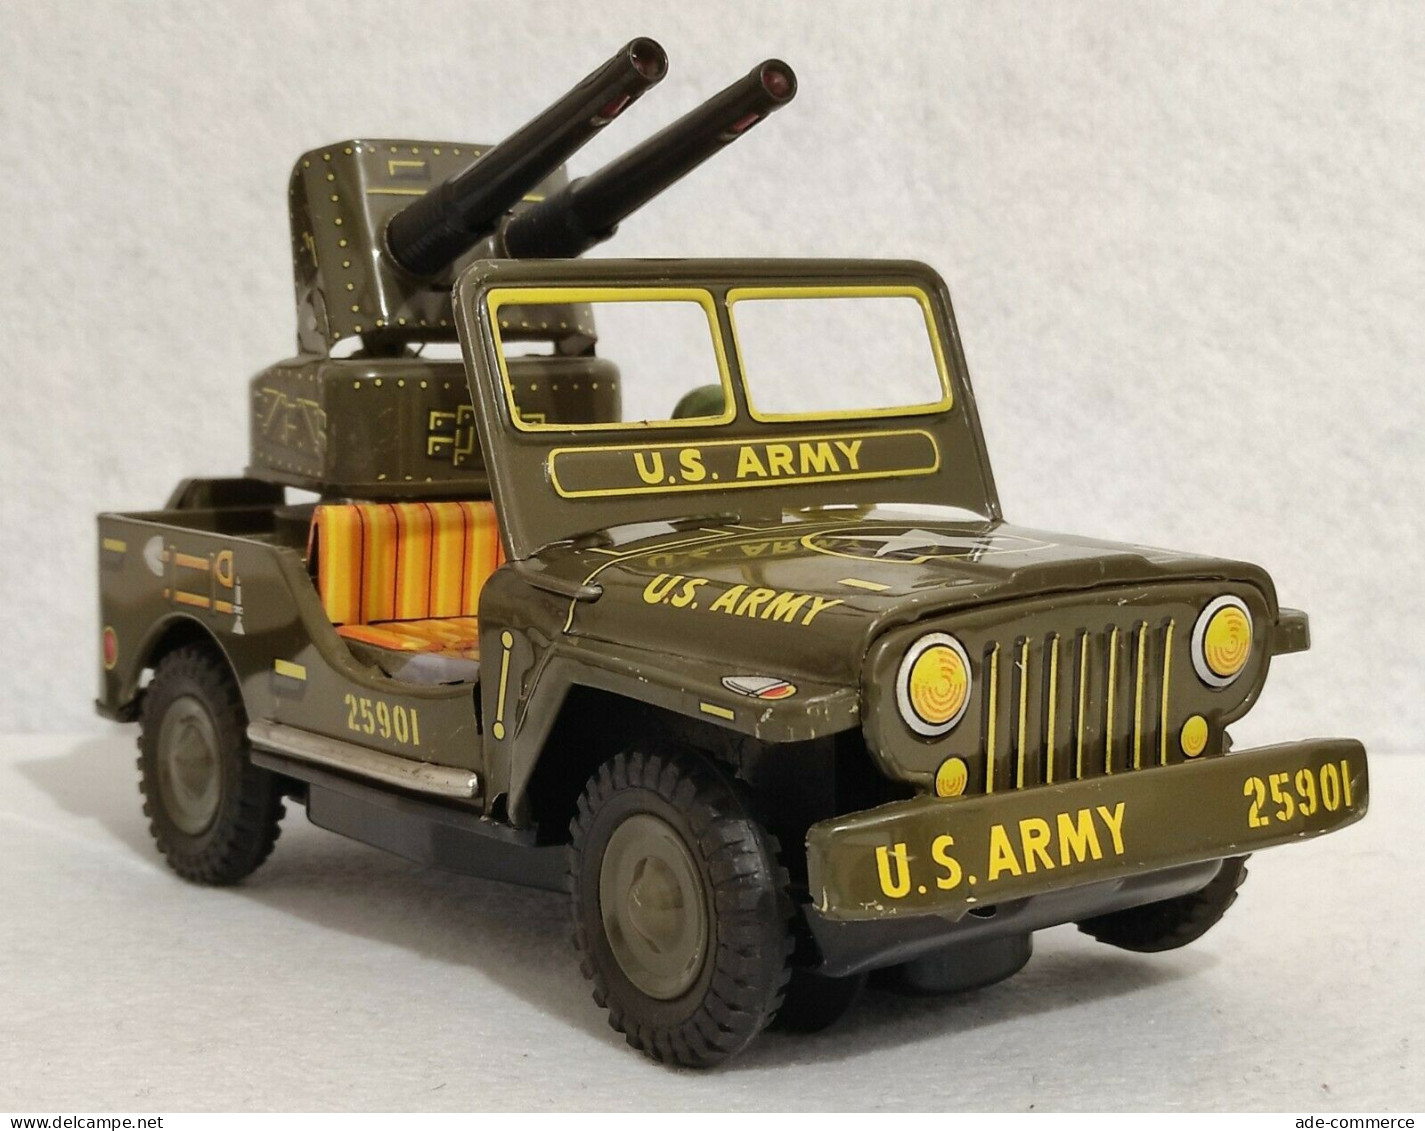 Jeep U.S. Army 25901 Made in Japan - Giocattolo Latta Batteria - Vintage